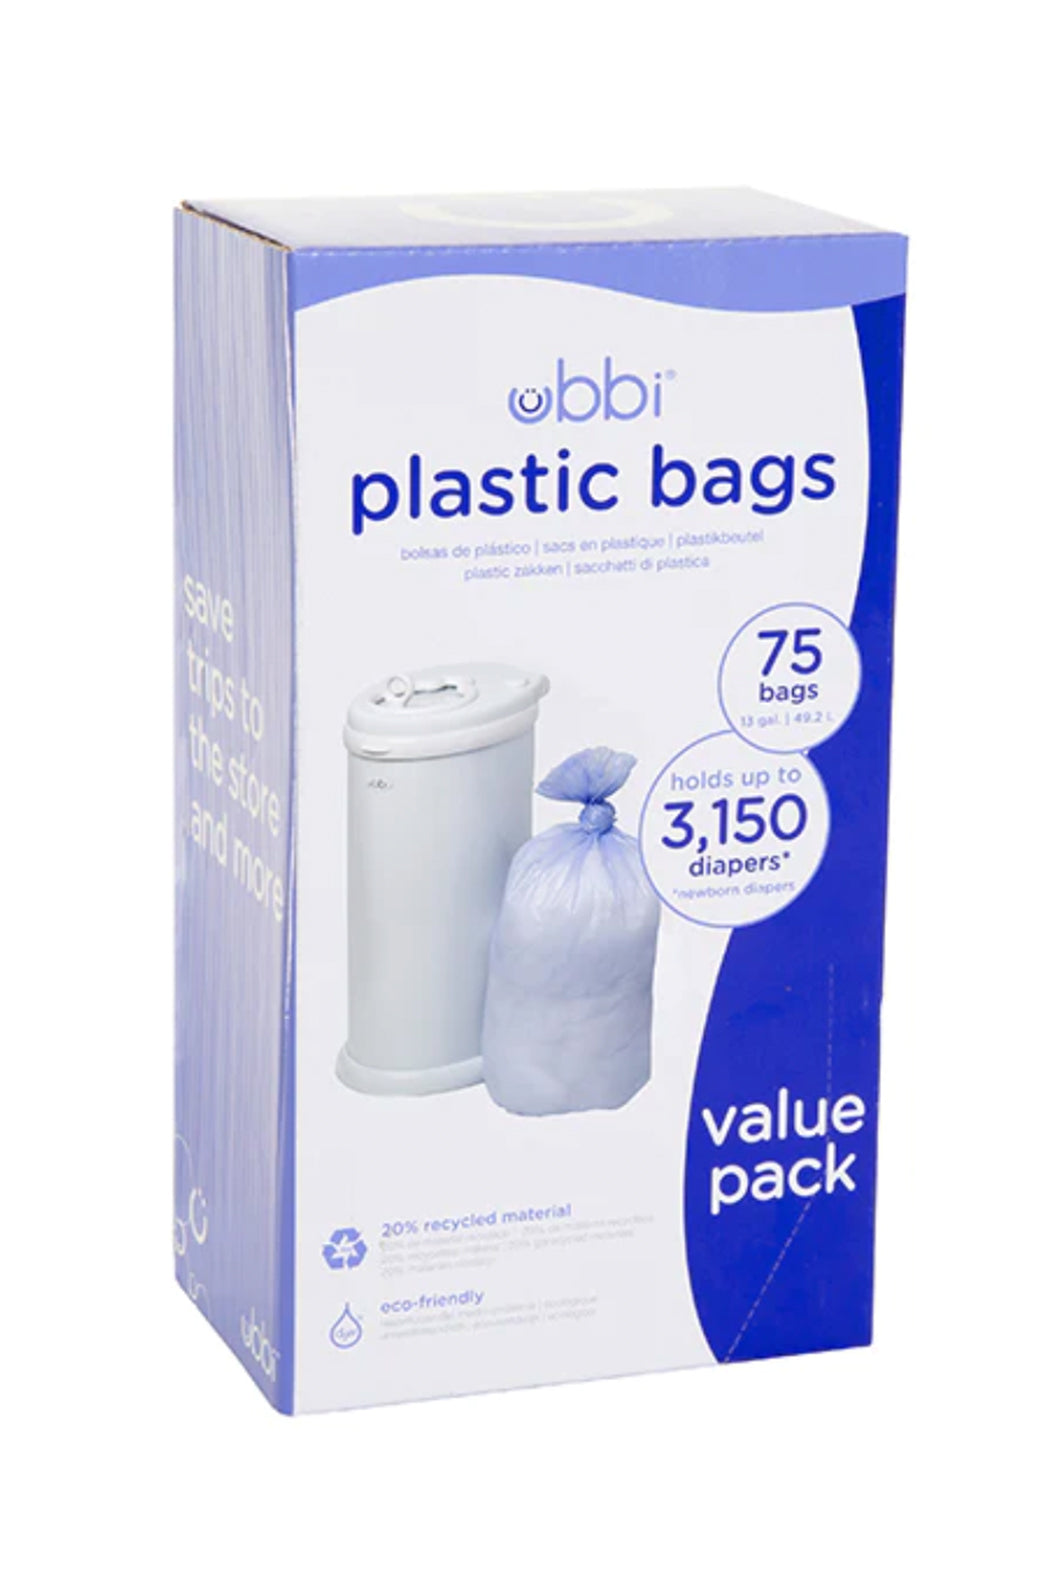 Ubbi Triple Pack Plastic Bags - 75